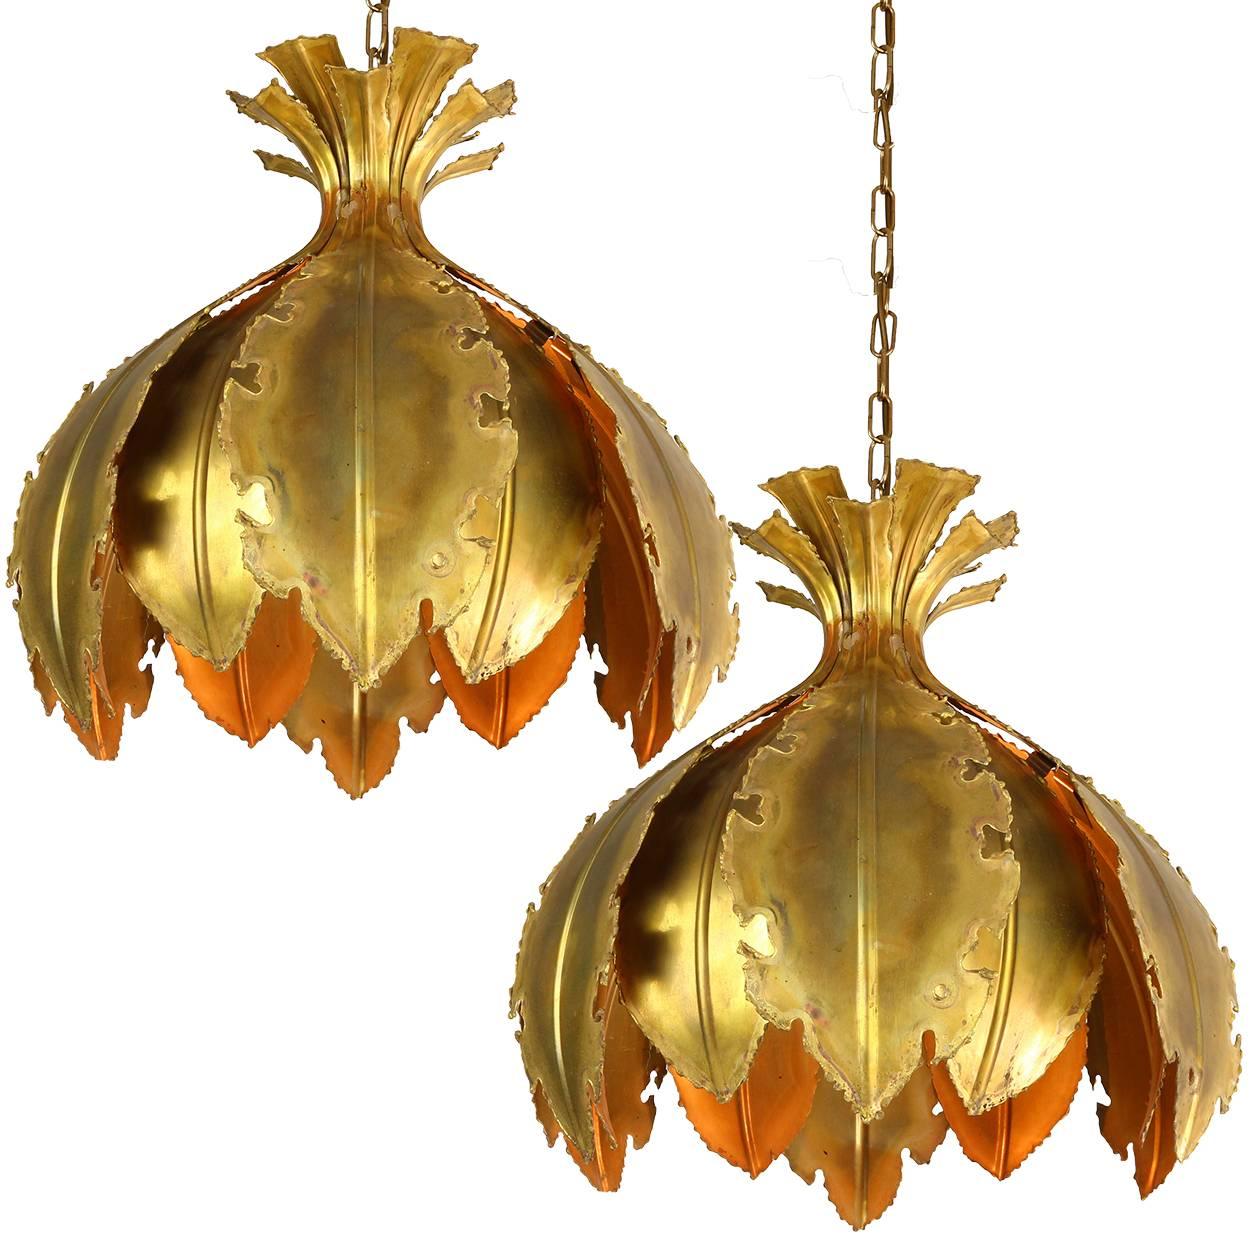 Pair of Svend Aage for Holm Sorensen Brutalist Acid Treated Brass Pendant Lamps